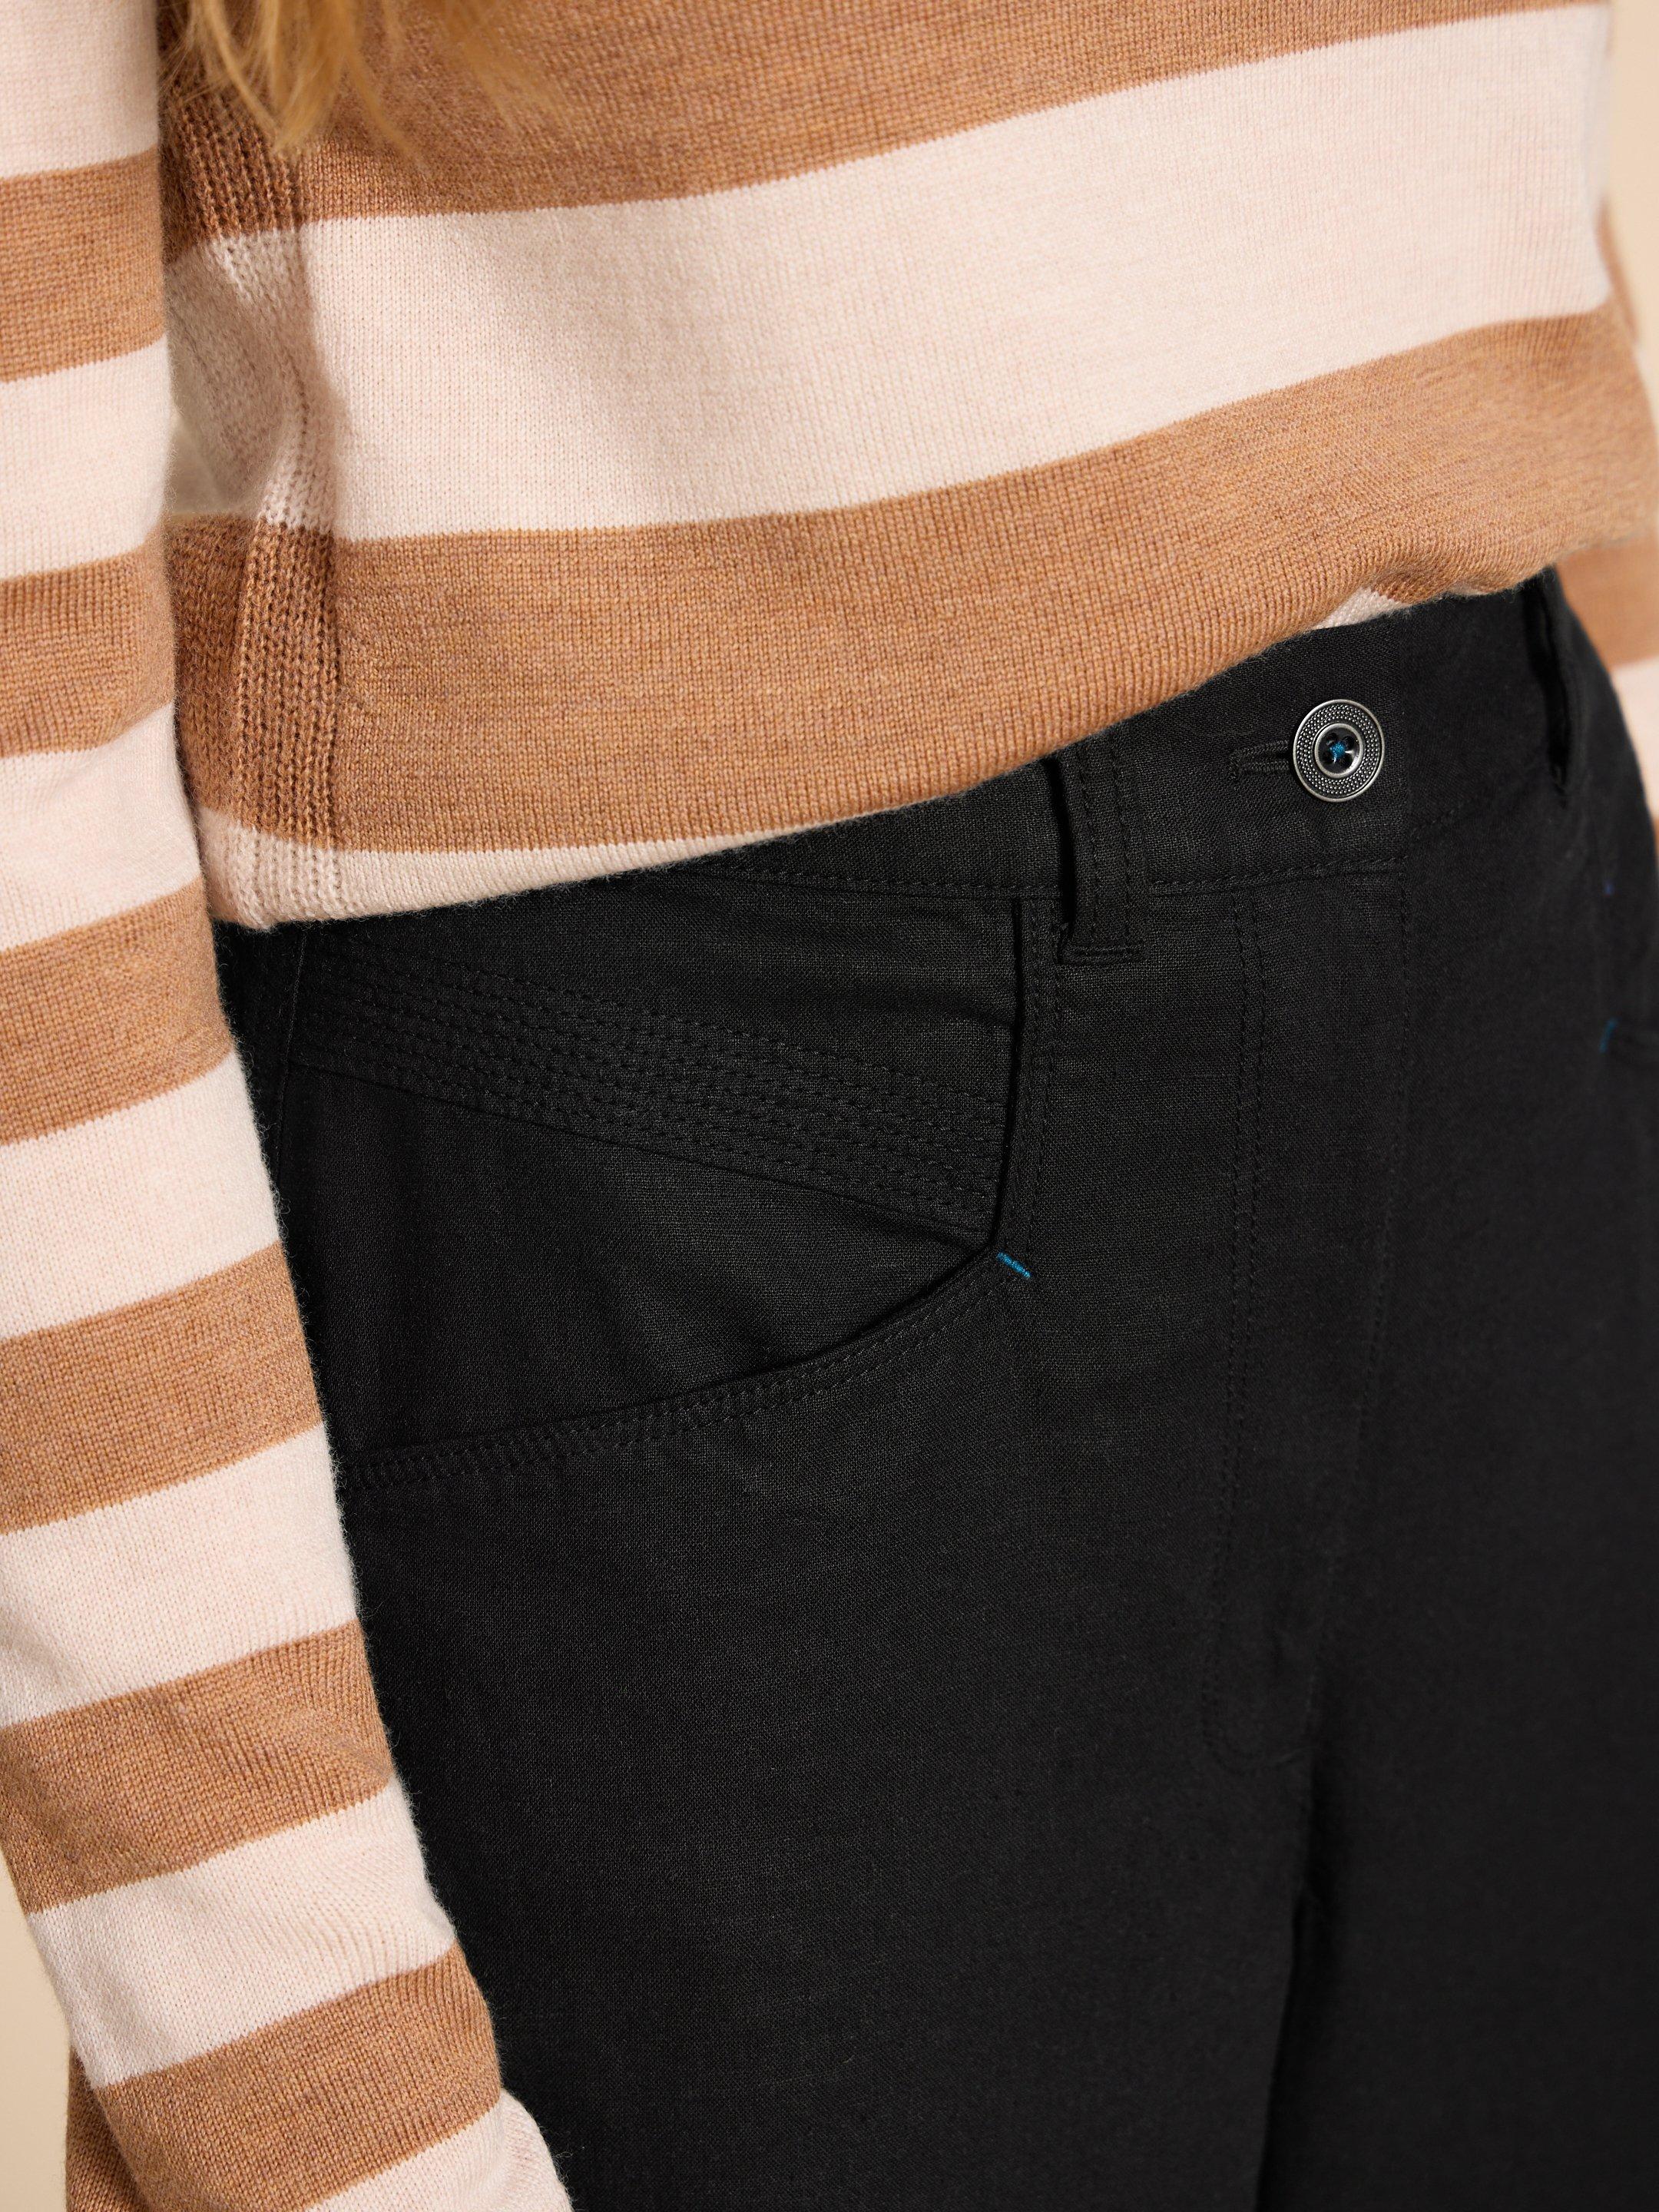 Harper Linen Blend Trouser in PURE BLK - MODEL DETAIL